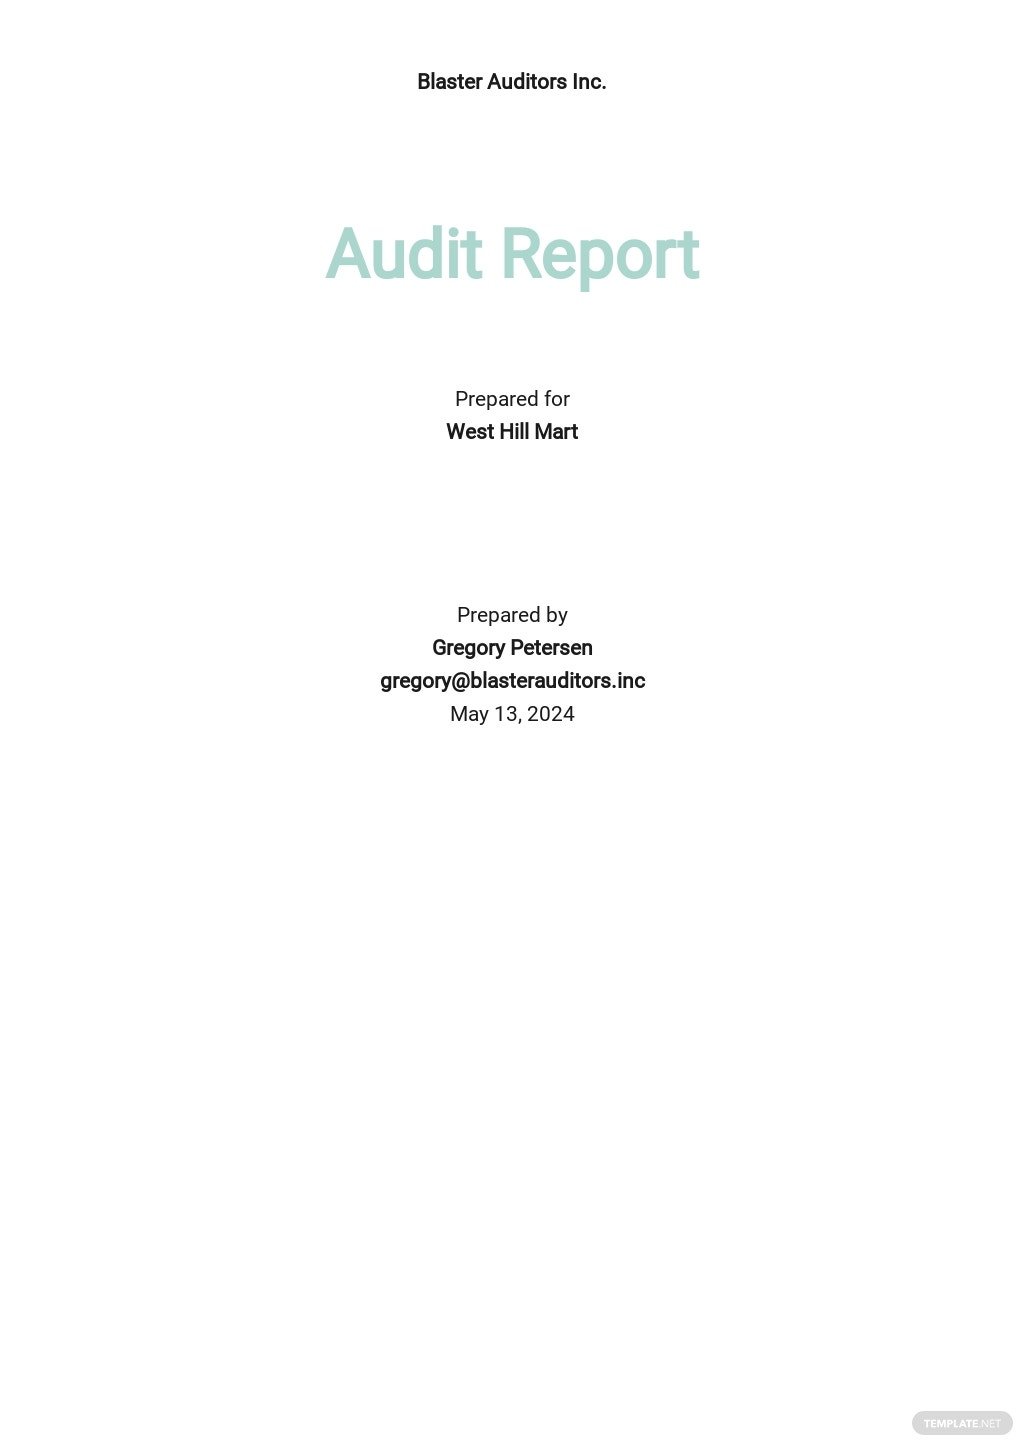 sample audit report template